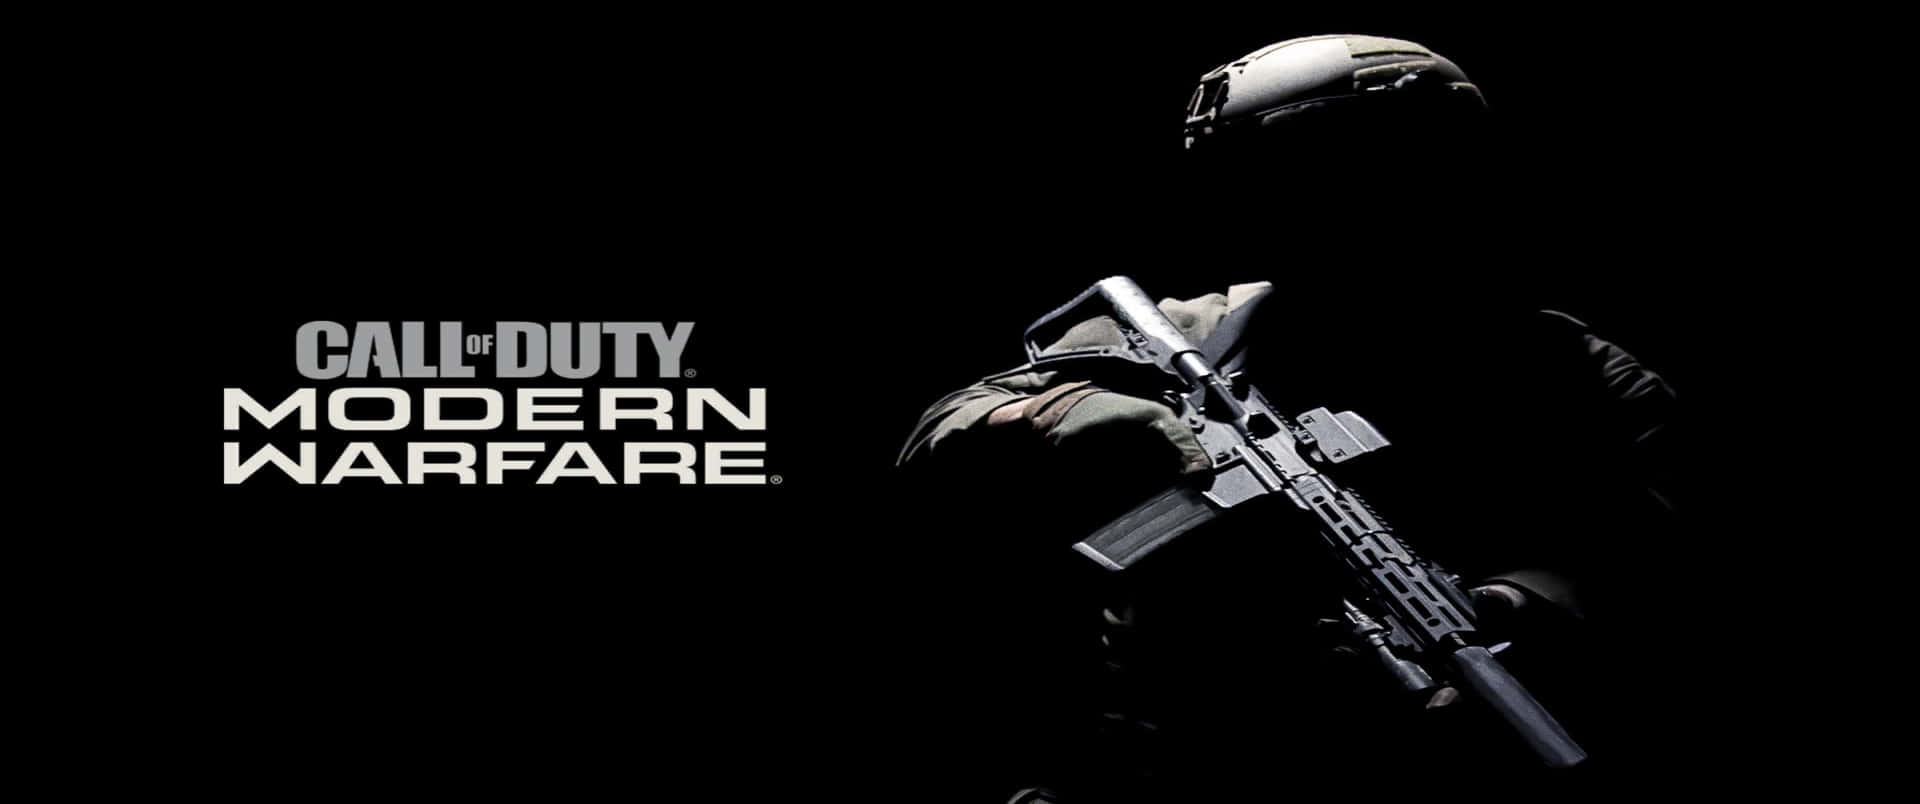 3440x1440p Fondods De Call Of Duty Modern Warfare